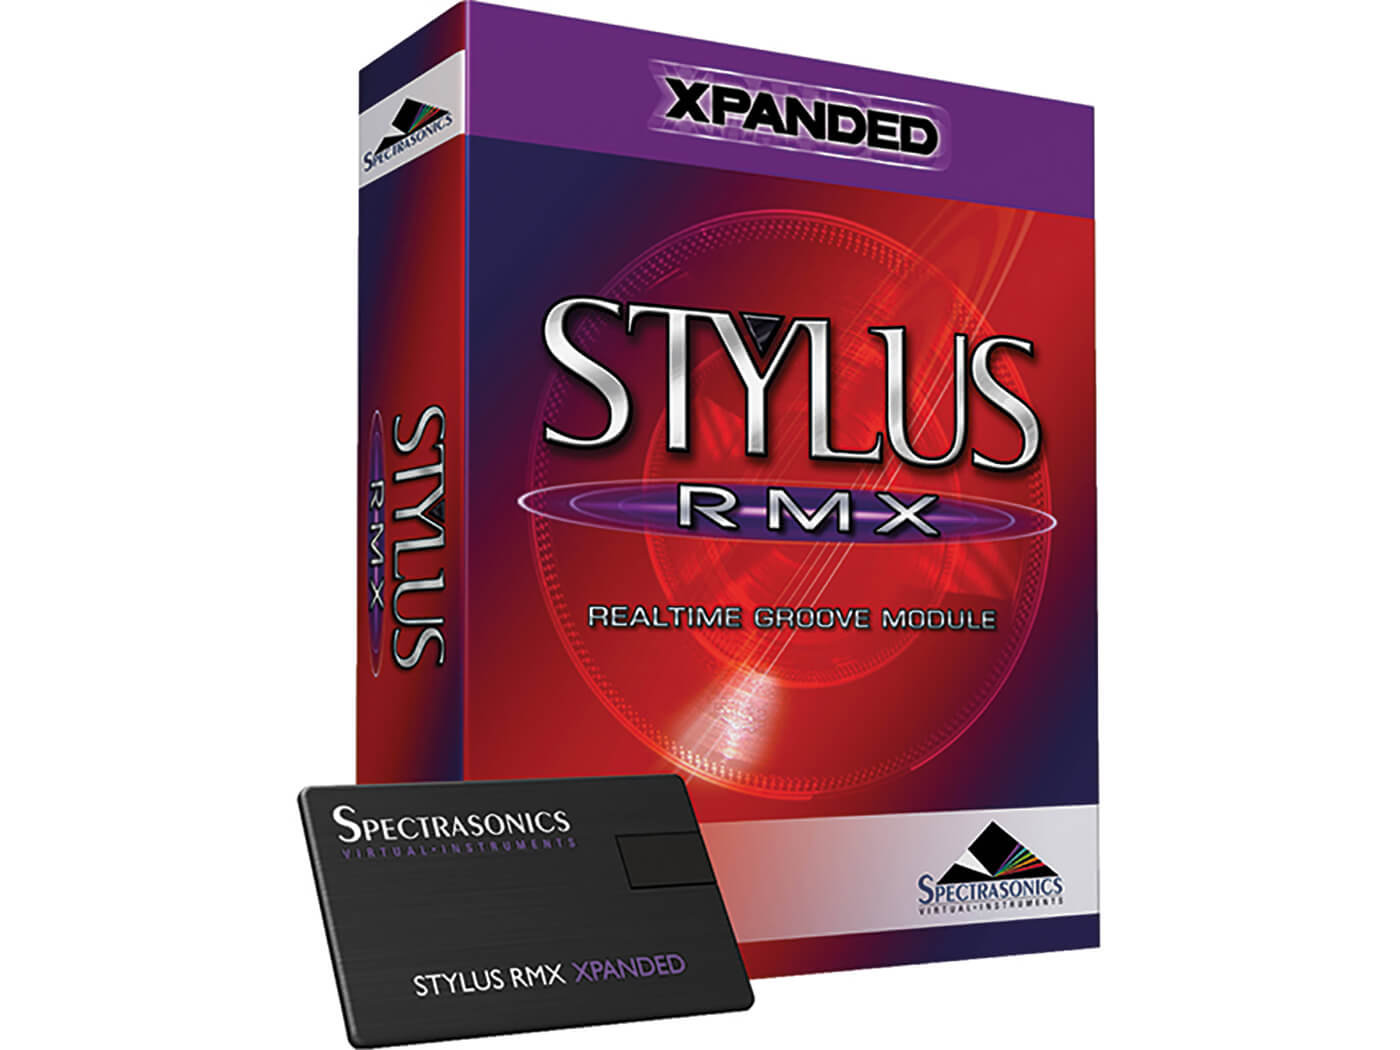 Spectrasonics Stylus RMX 